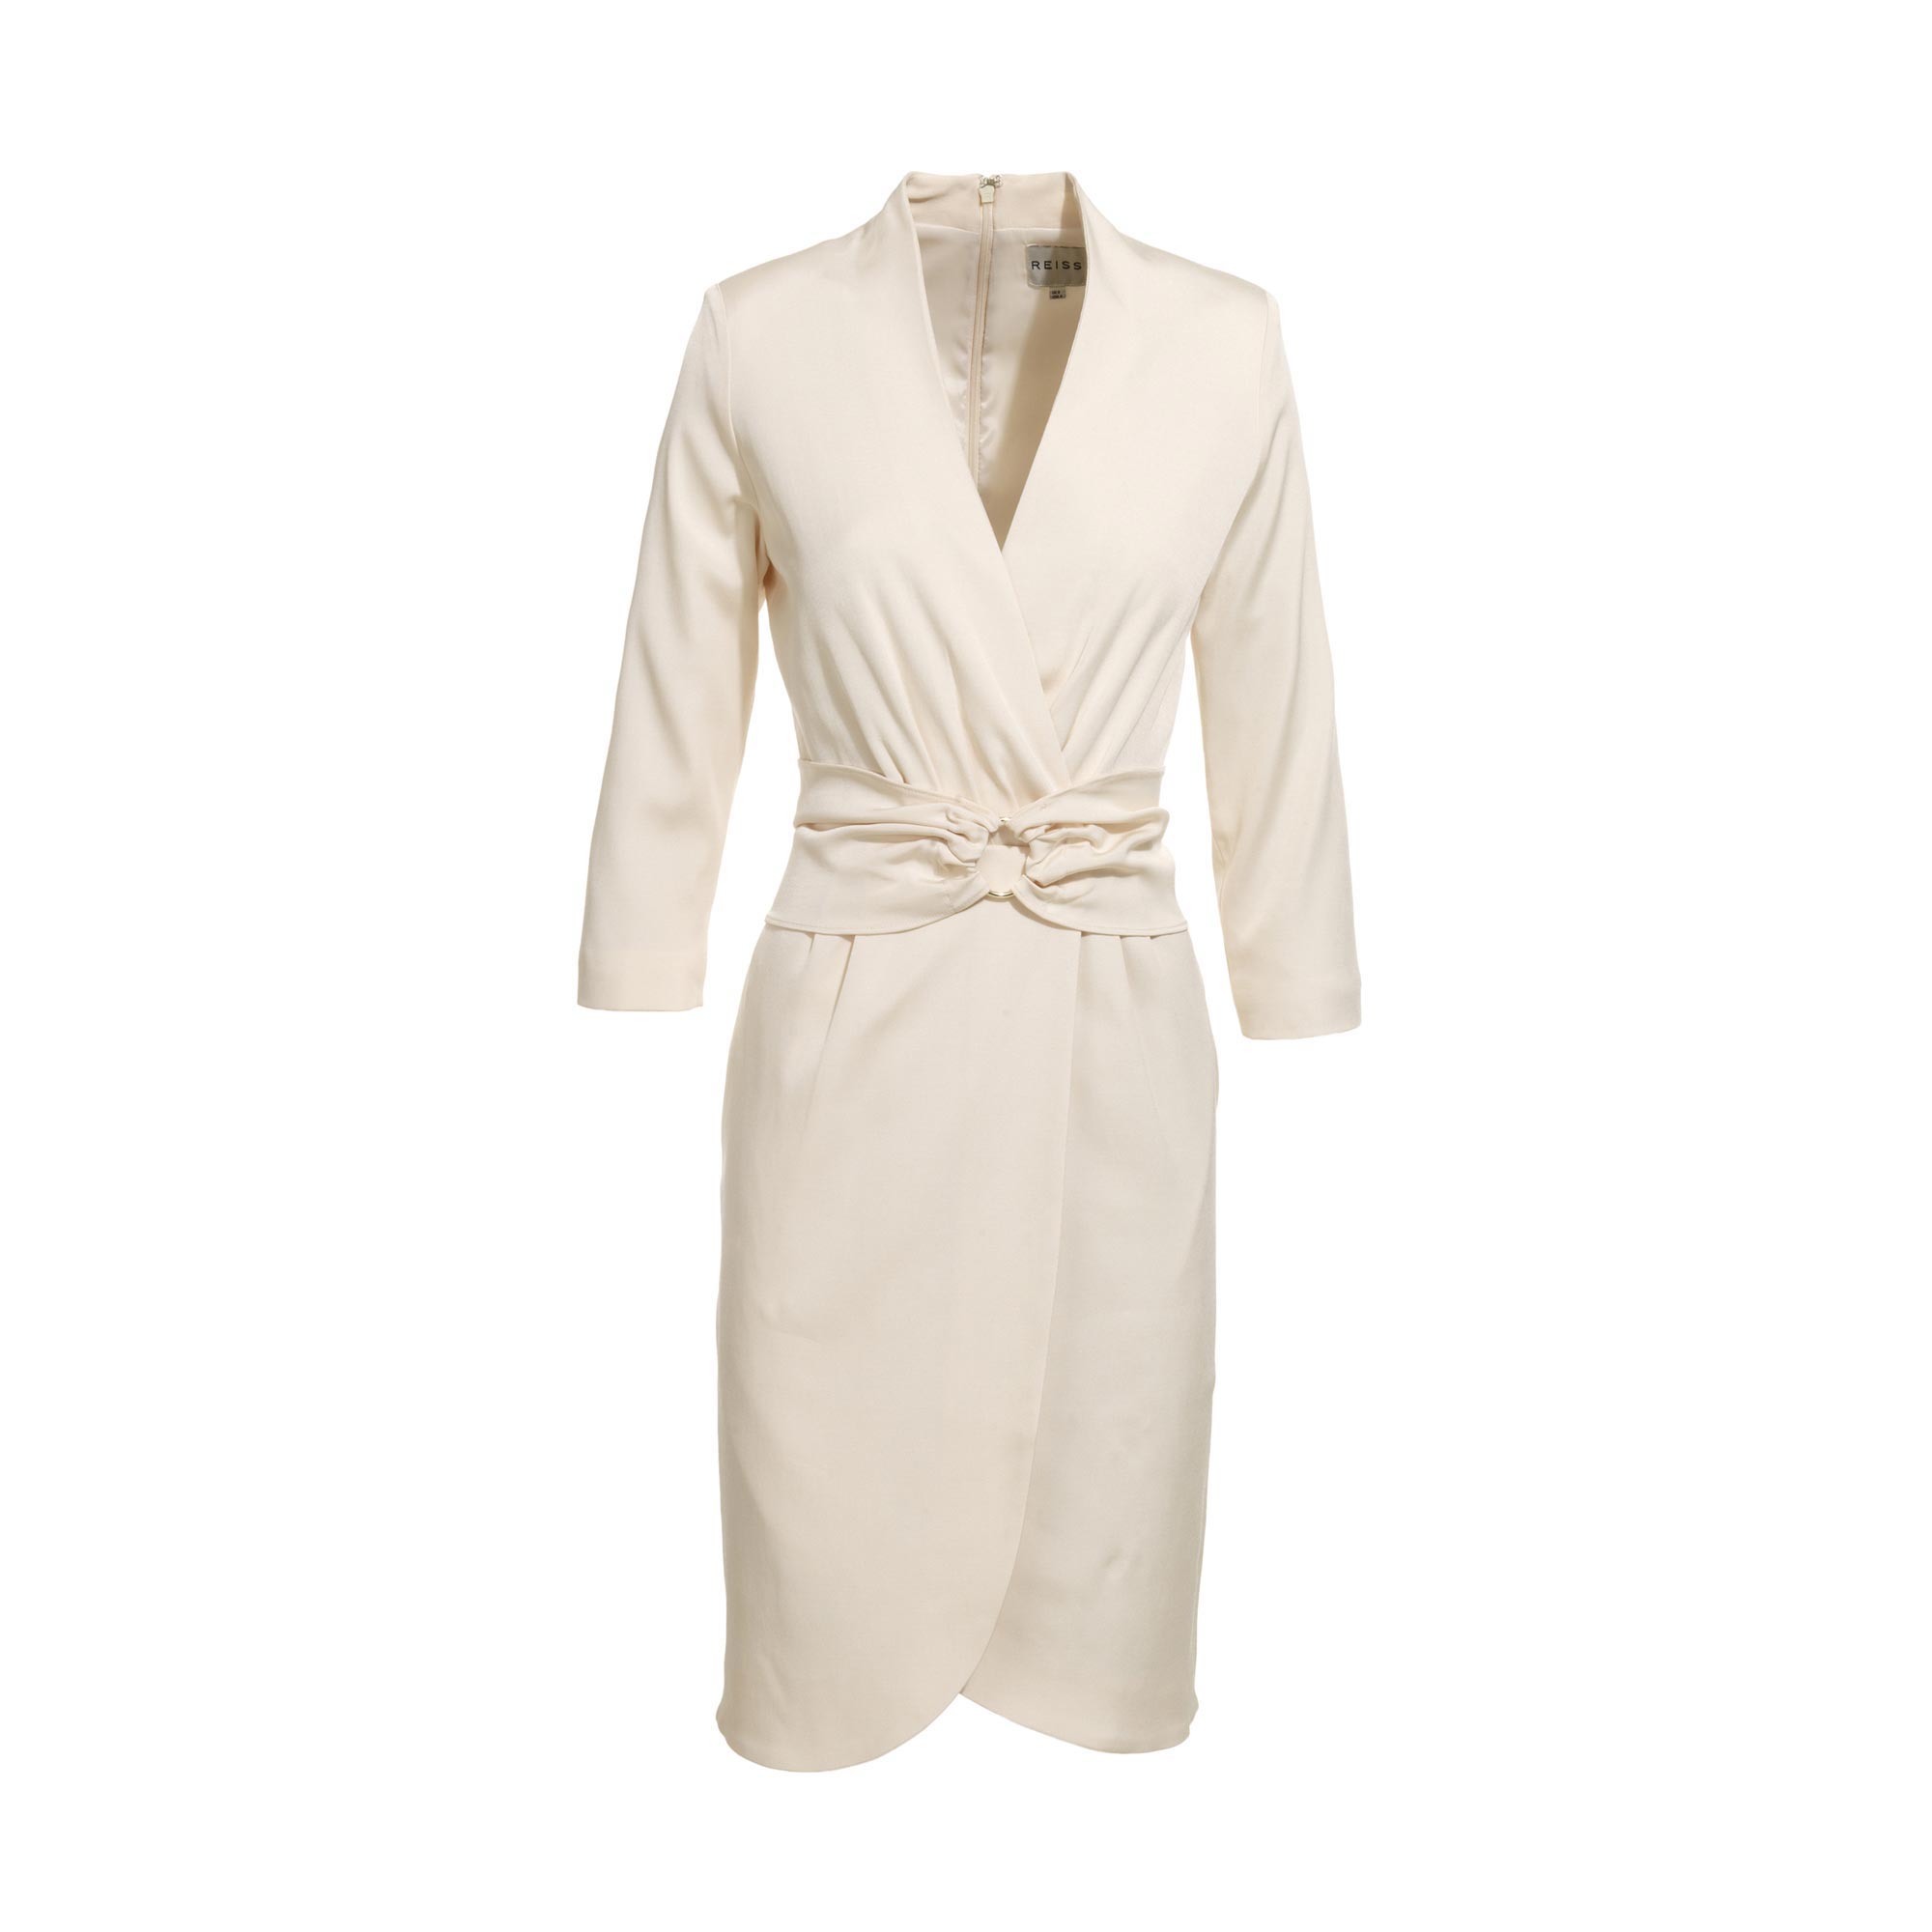 Reiss Wrap Front Trim Dress in Beige (cream) | Lyst